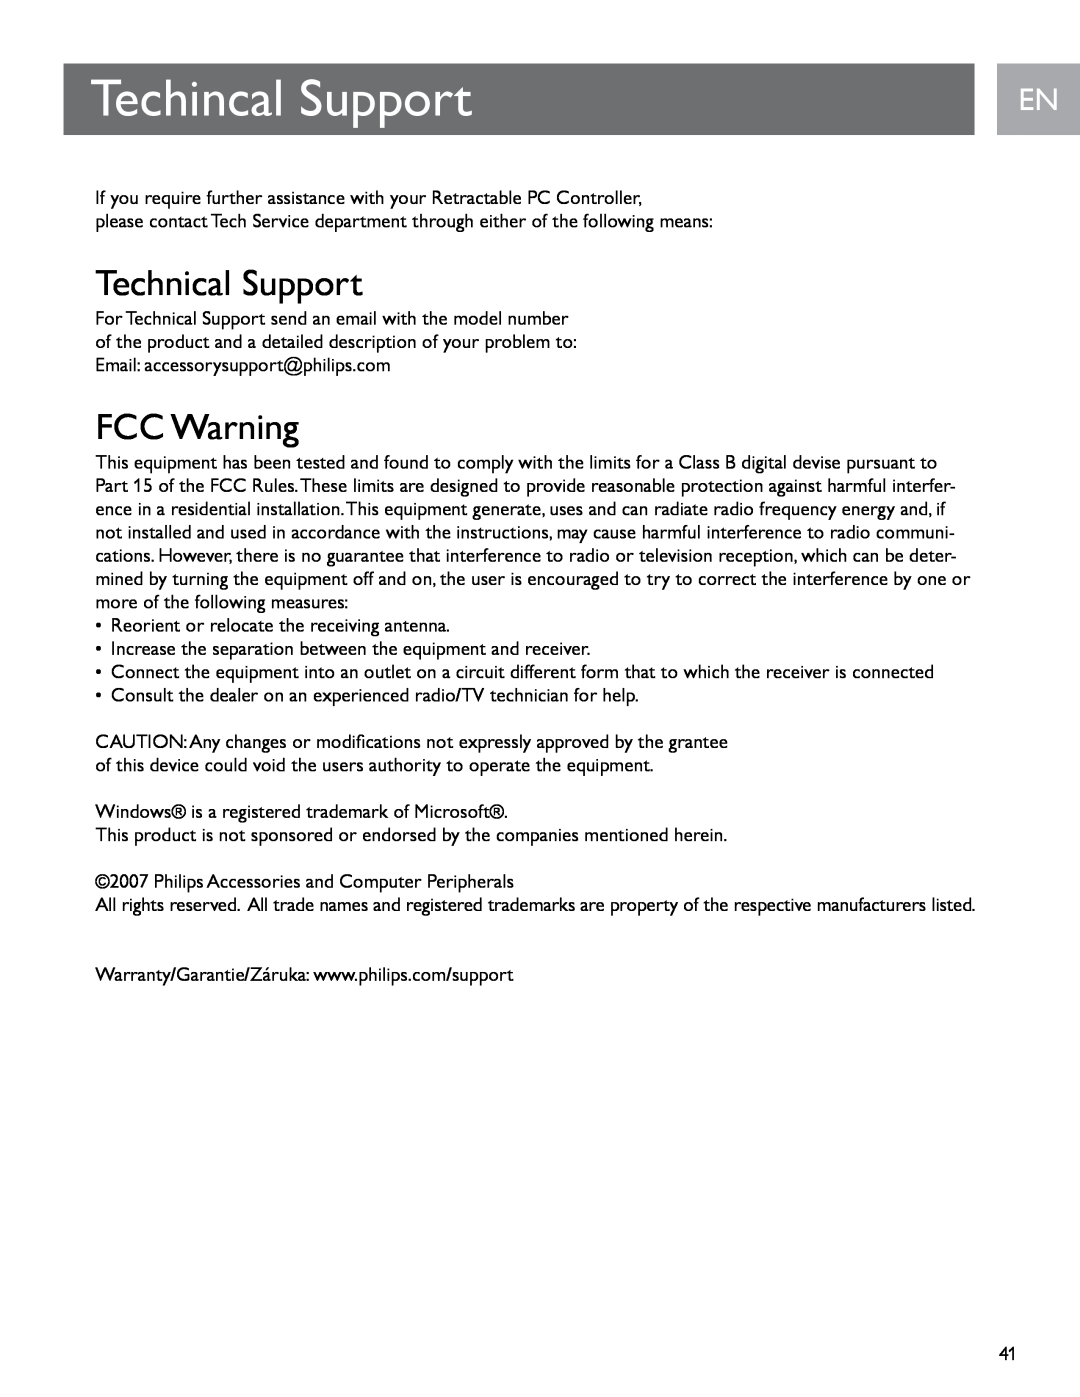 Philips SGC2909 user manual Techincal Support, Technical Support, FCC Warning, En En 